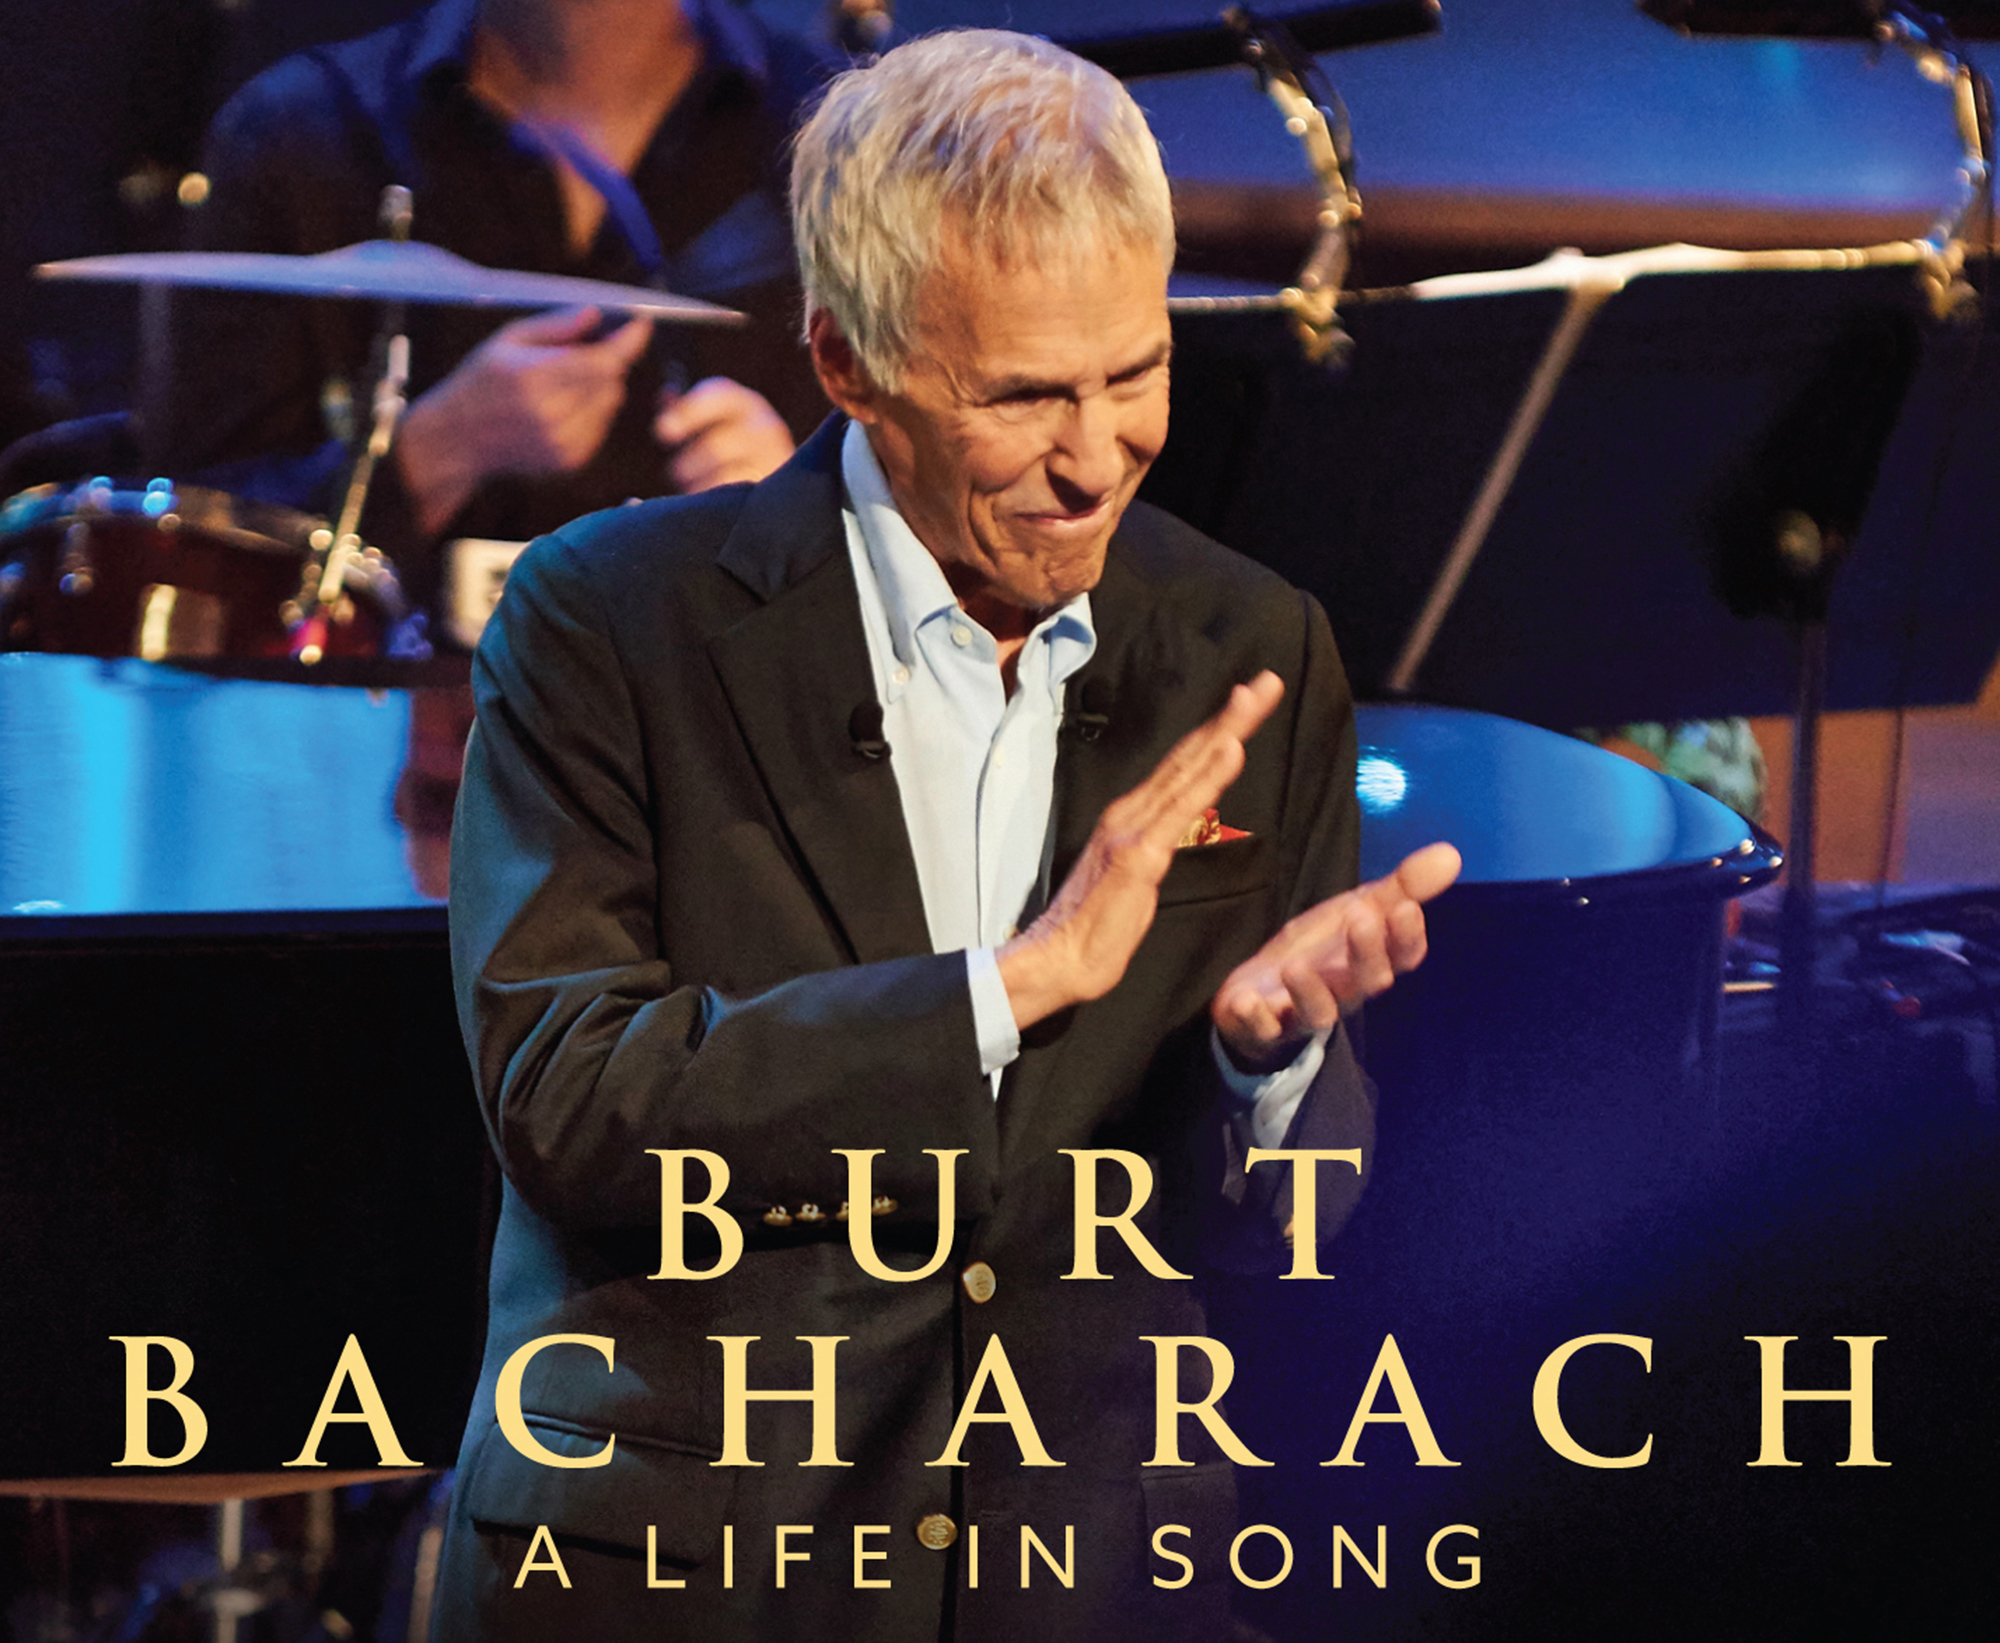 Burt Bacharach - A Life In Song - Poster.jpeg